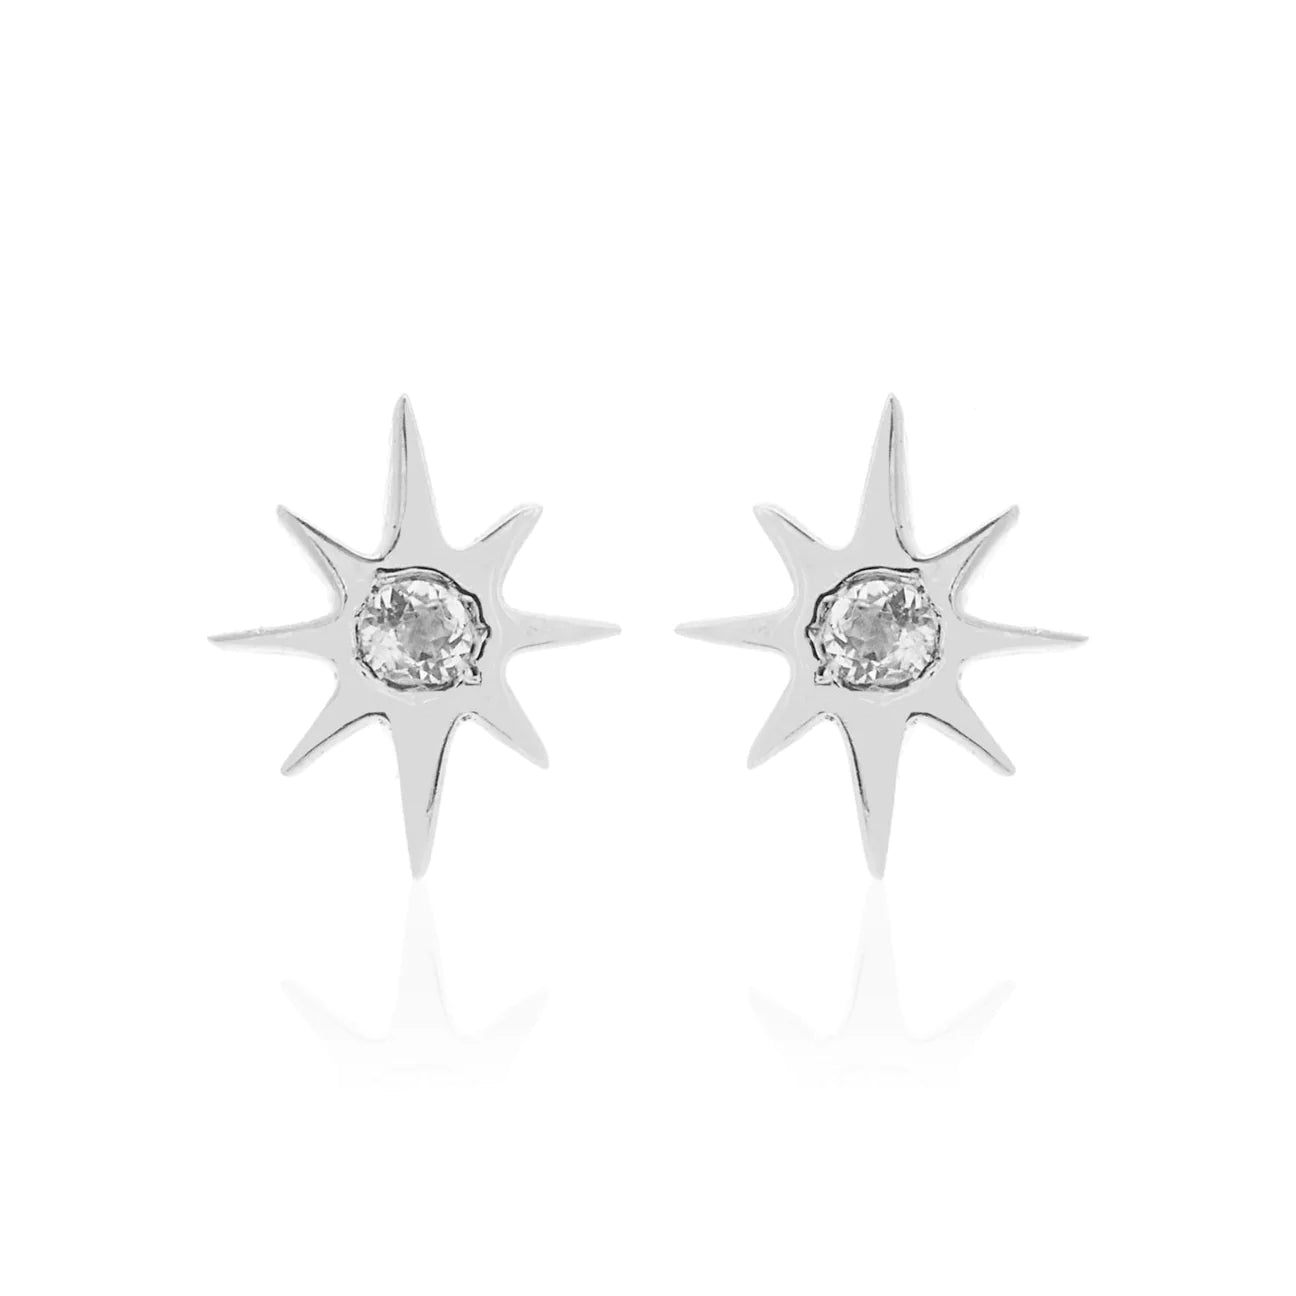 Star stud earrings with white topaz.